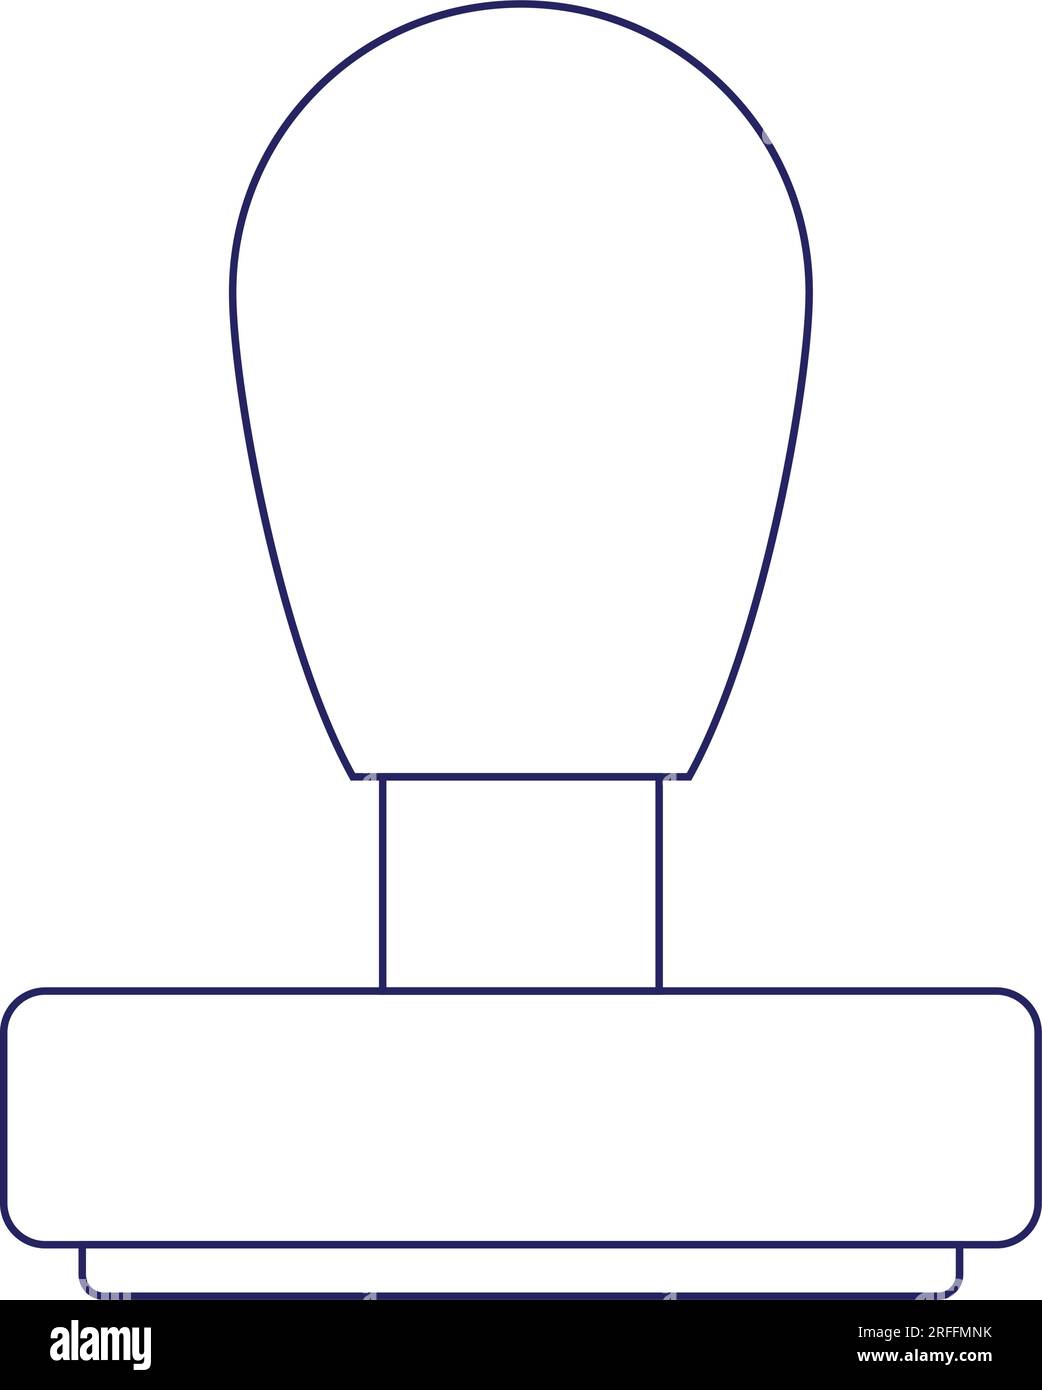 Stempelvektorsymbol Symboldesign Stock Vektor